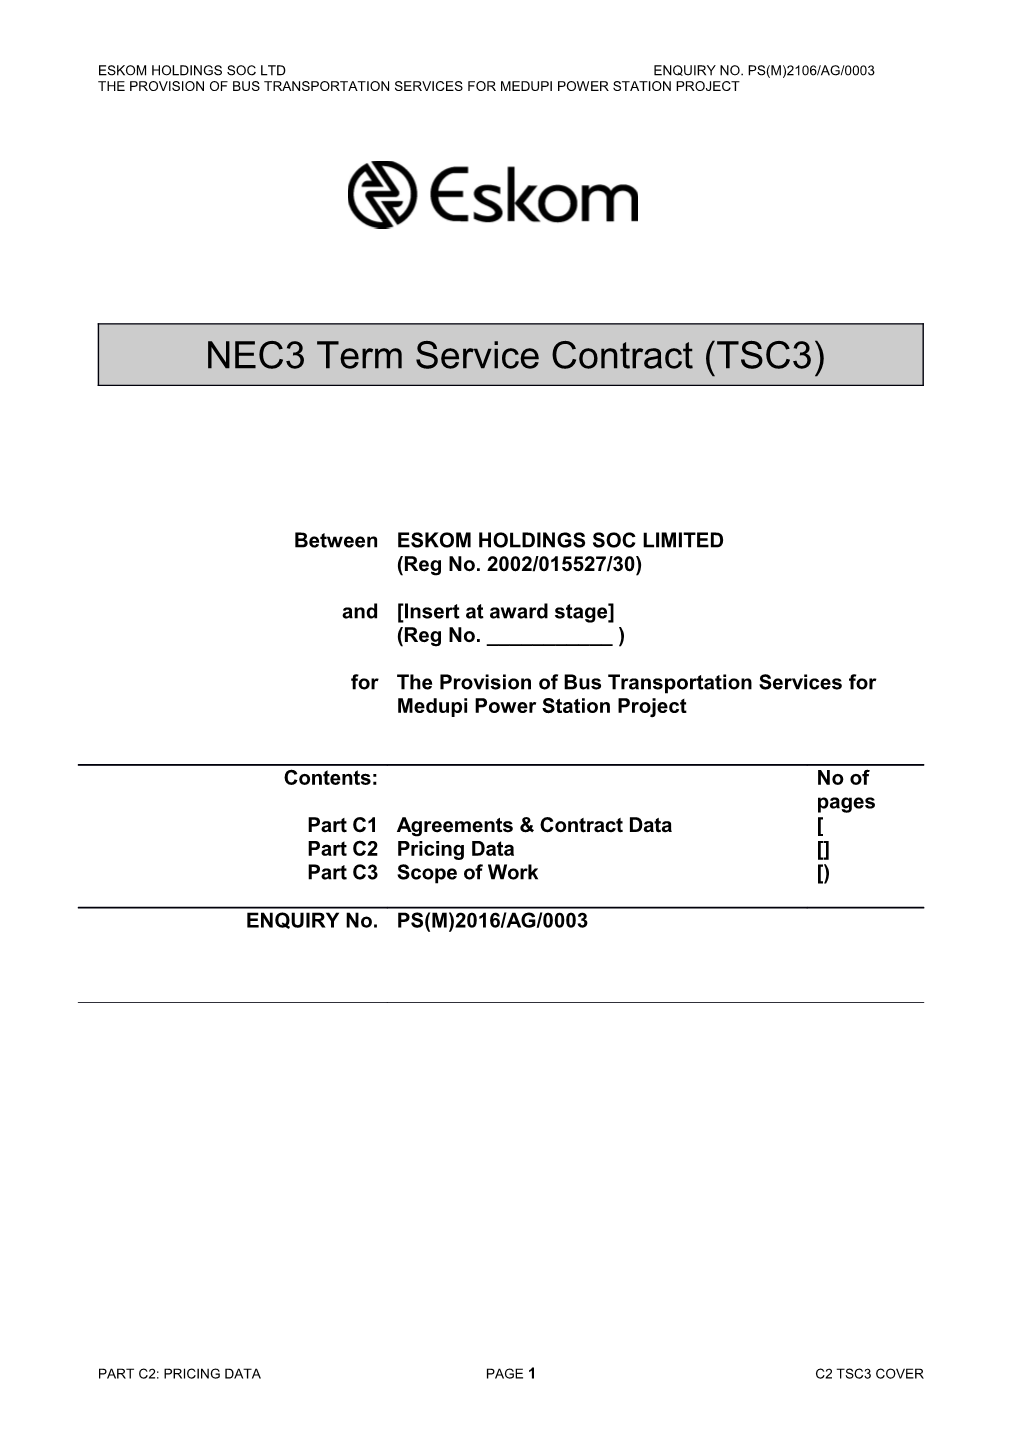 Eskom Holdings SOC Ltd Enquiry No. PS(M)2106/AG/0003